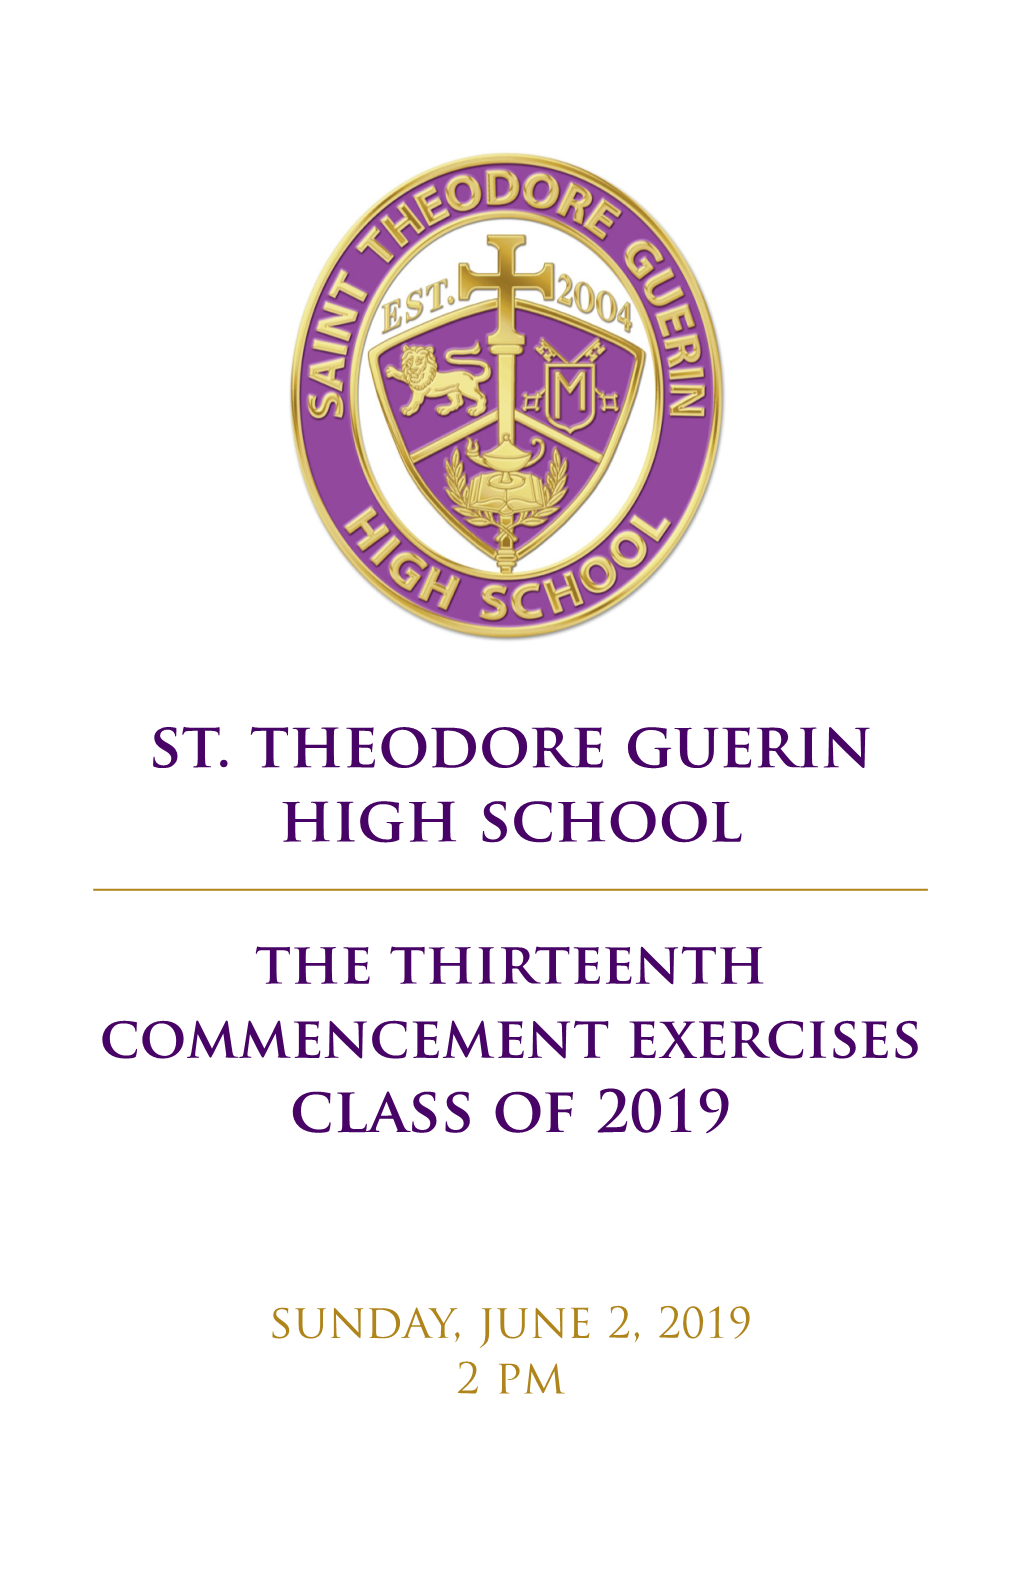 St. Theodore Guerin High School Class of 2019